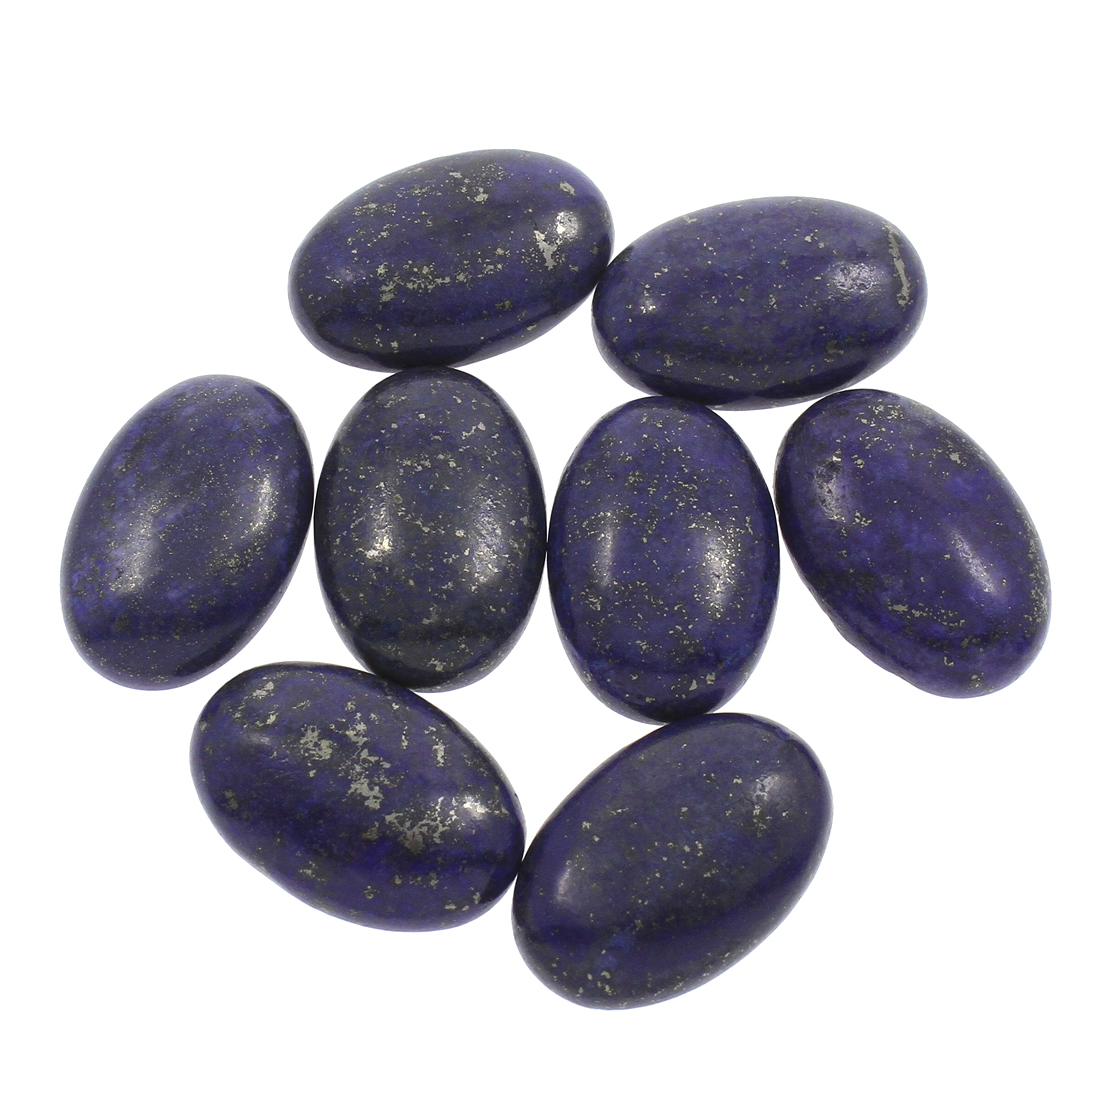 5:lazulite